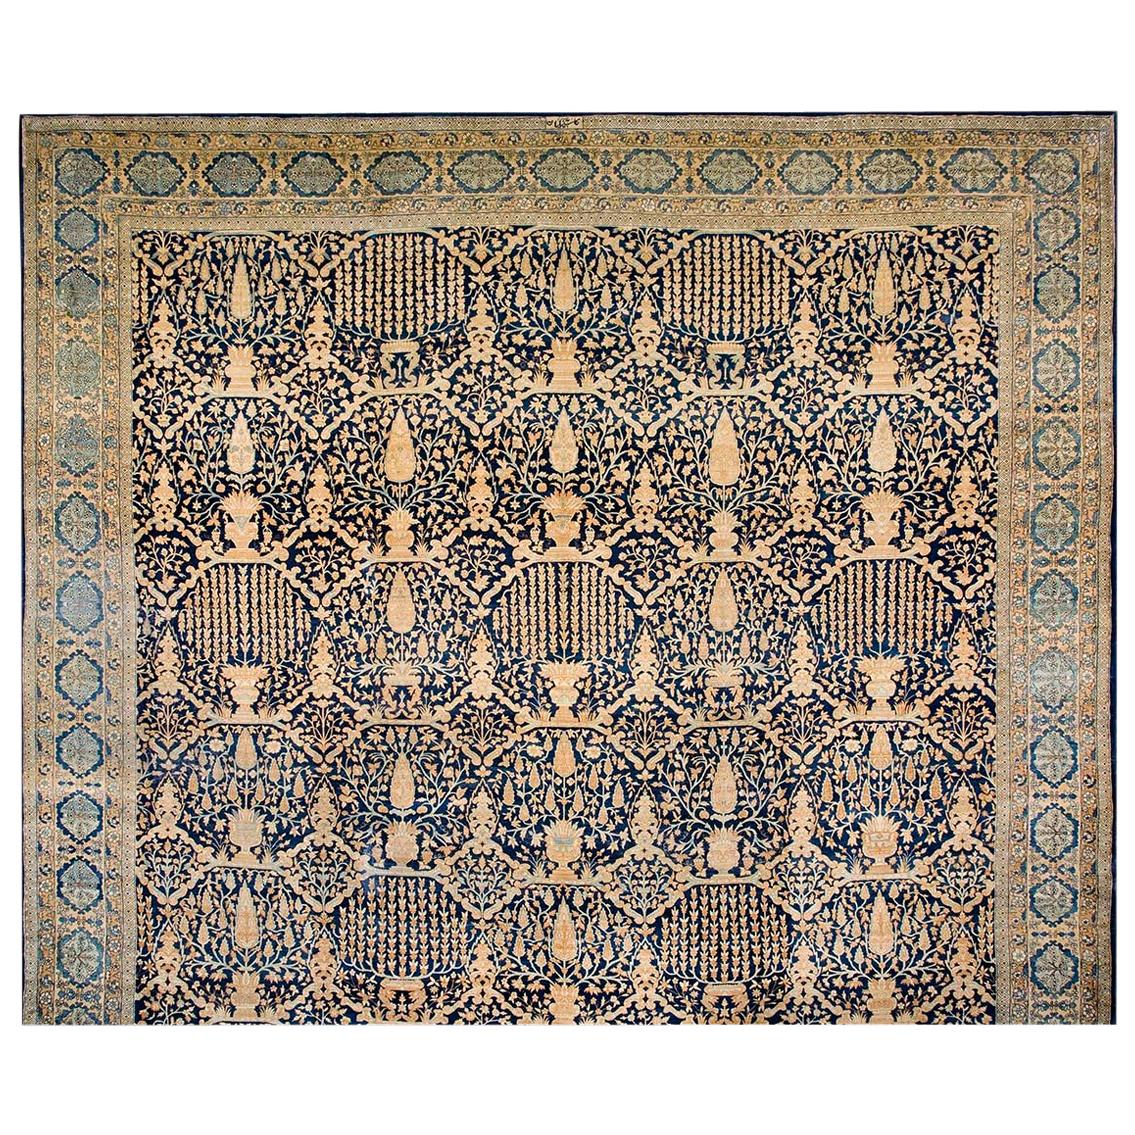 Early 20th Century Persian Kerman Lavar Carpet by OCM ( 16'4"x 30' - 498 x 915 )